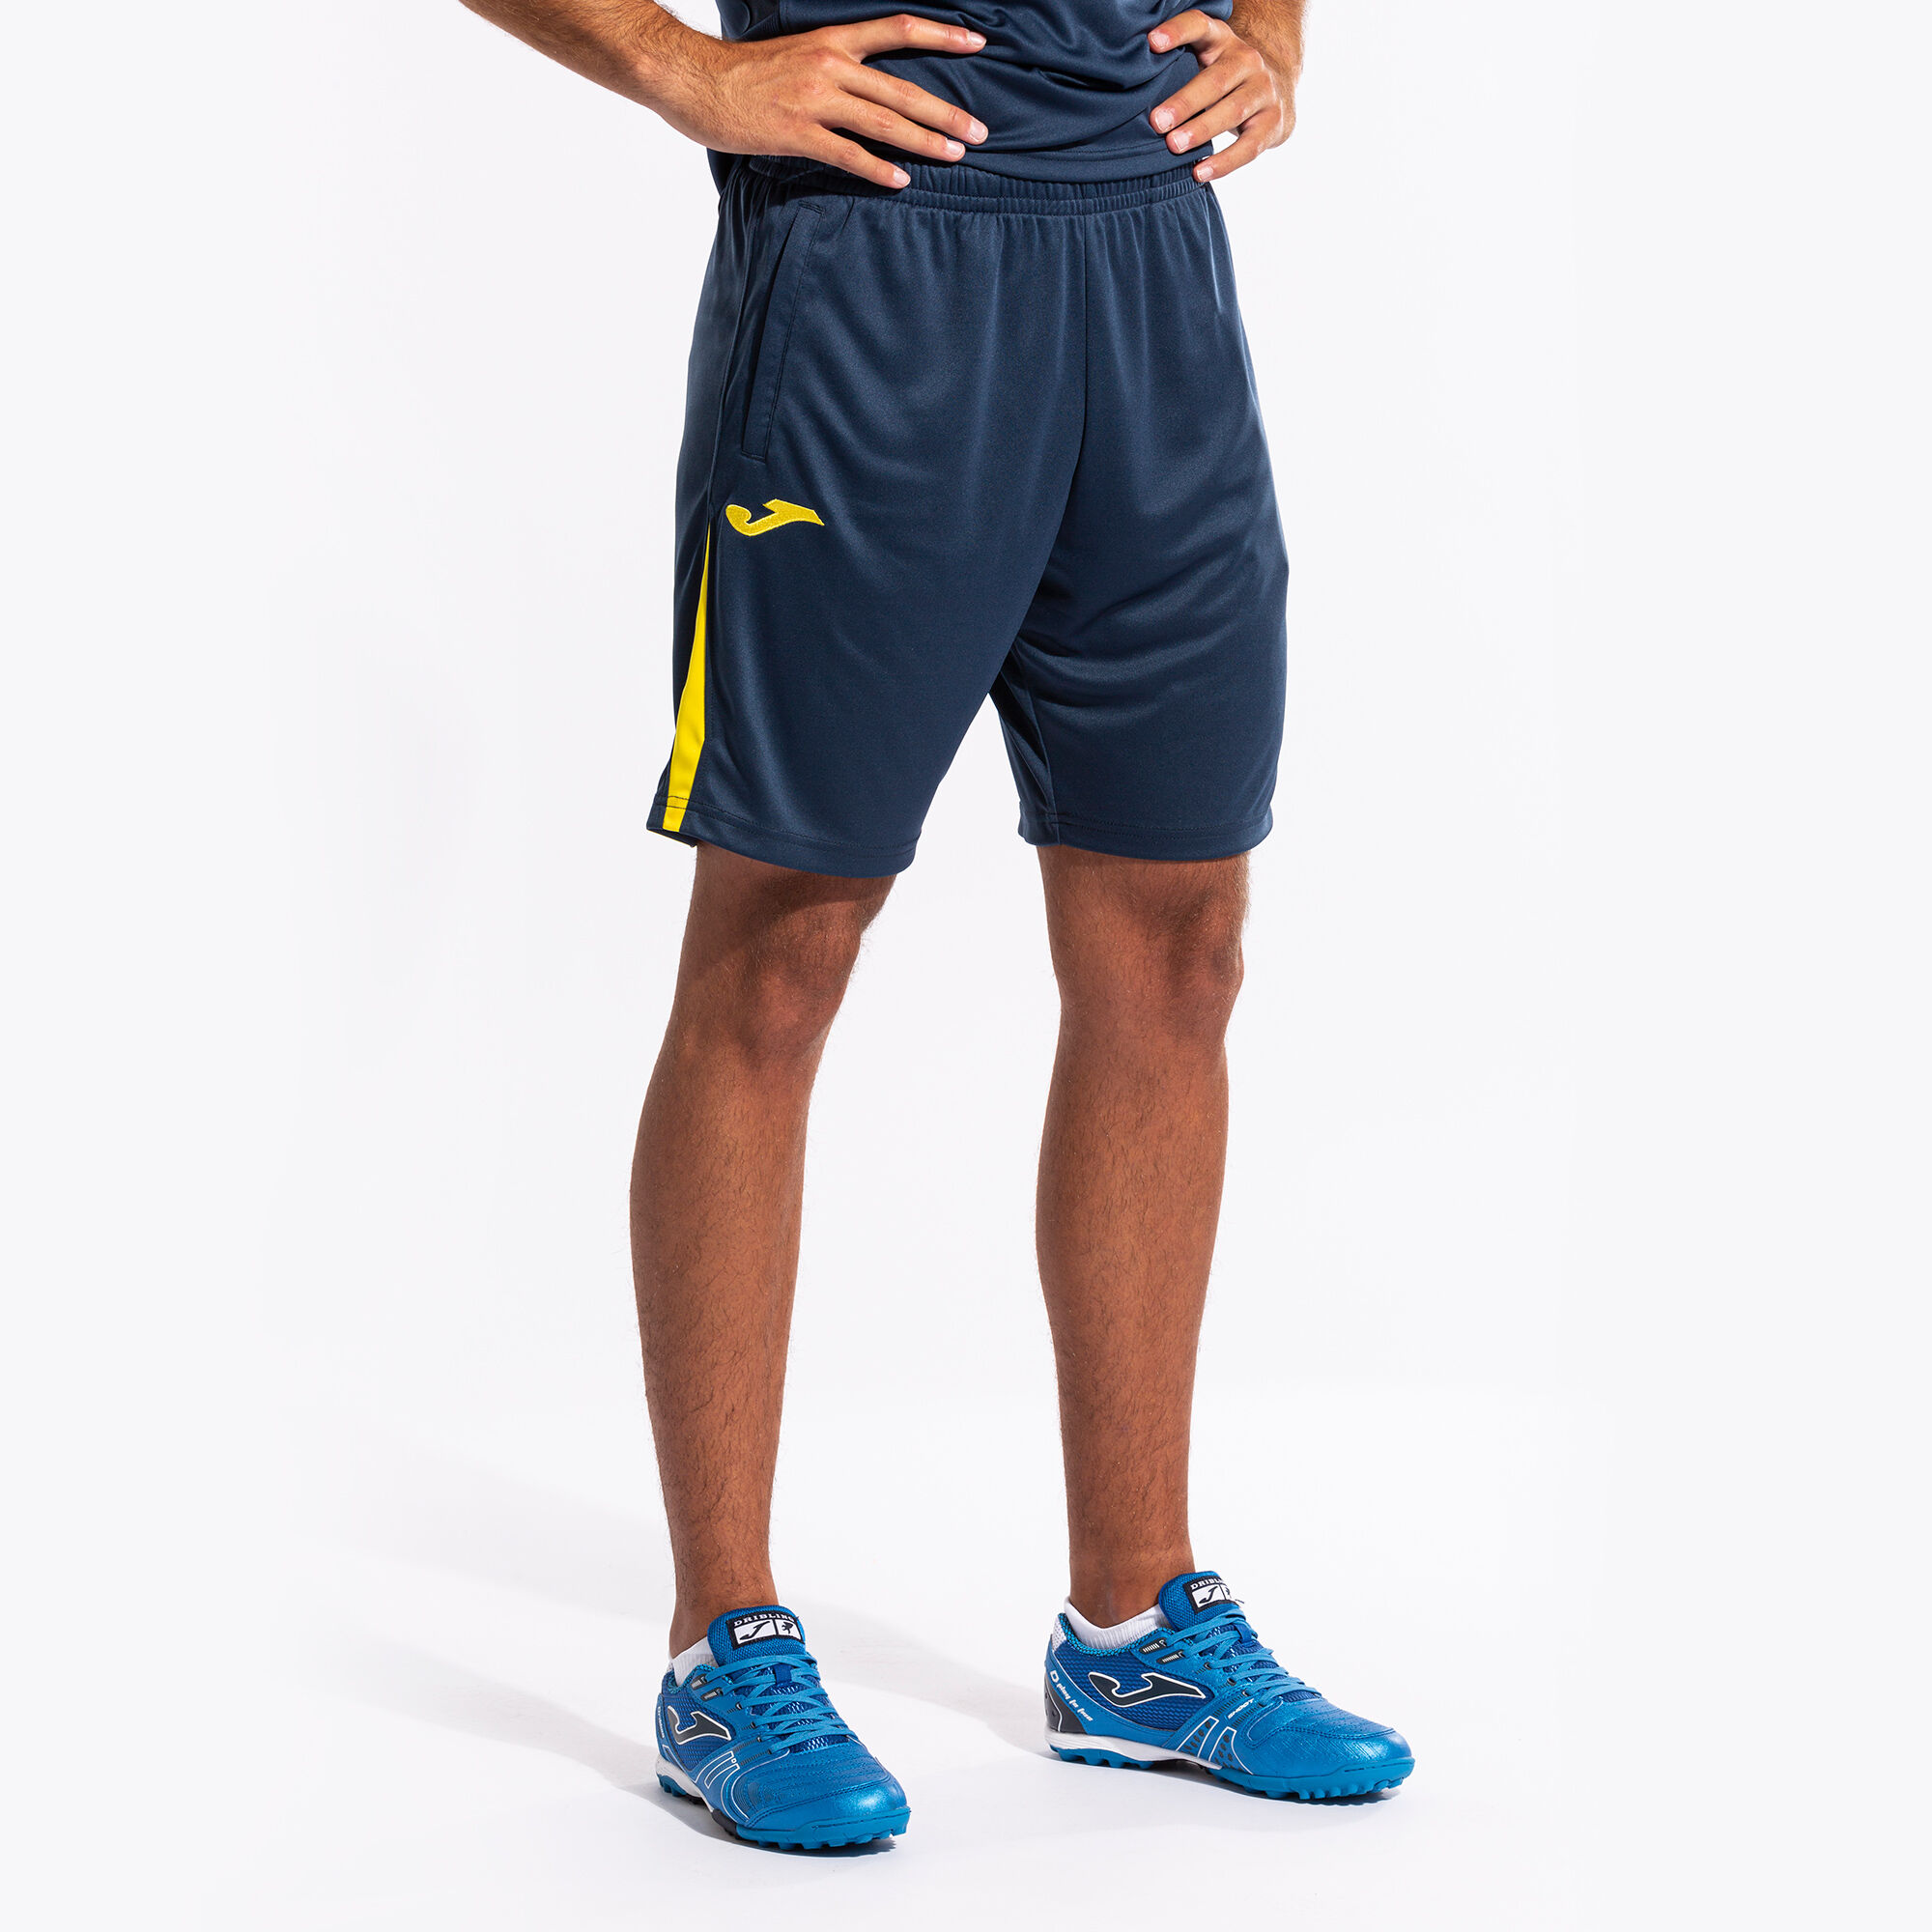 Bermuda shorts man Championship VII navy blue yellow